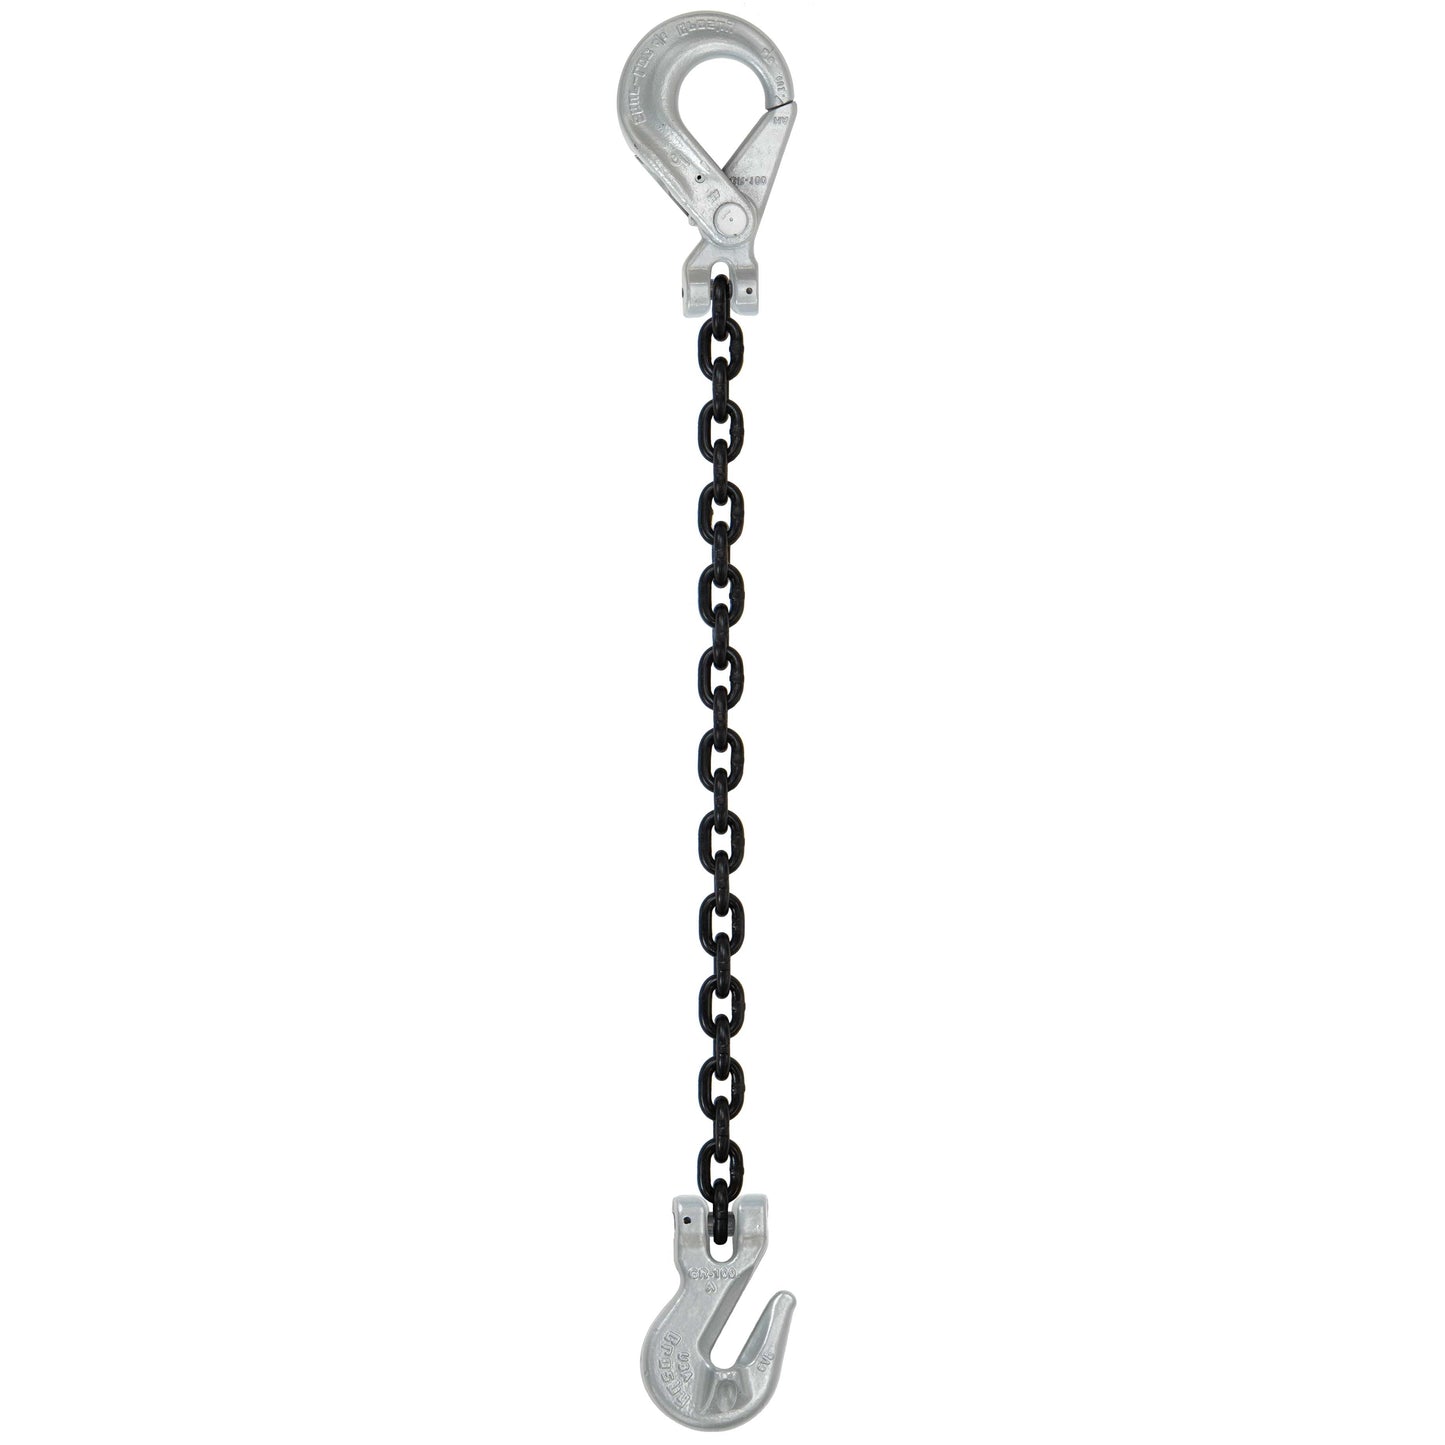 12 inch x 3 foot Domestic Single Leg Chain Sling w Crosby Grab & SelfLocking Hooks Grade 100 image 1 of 2